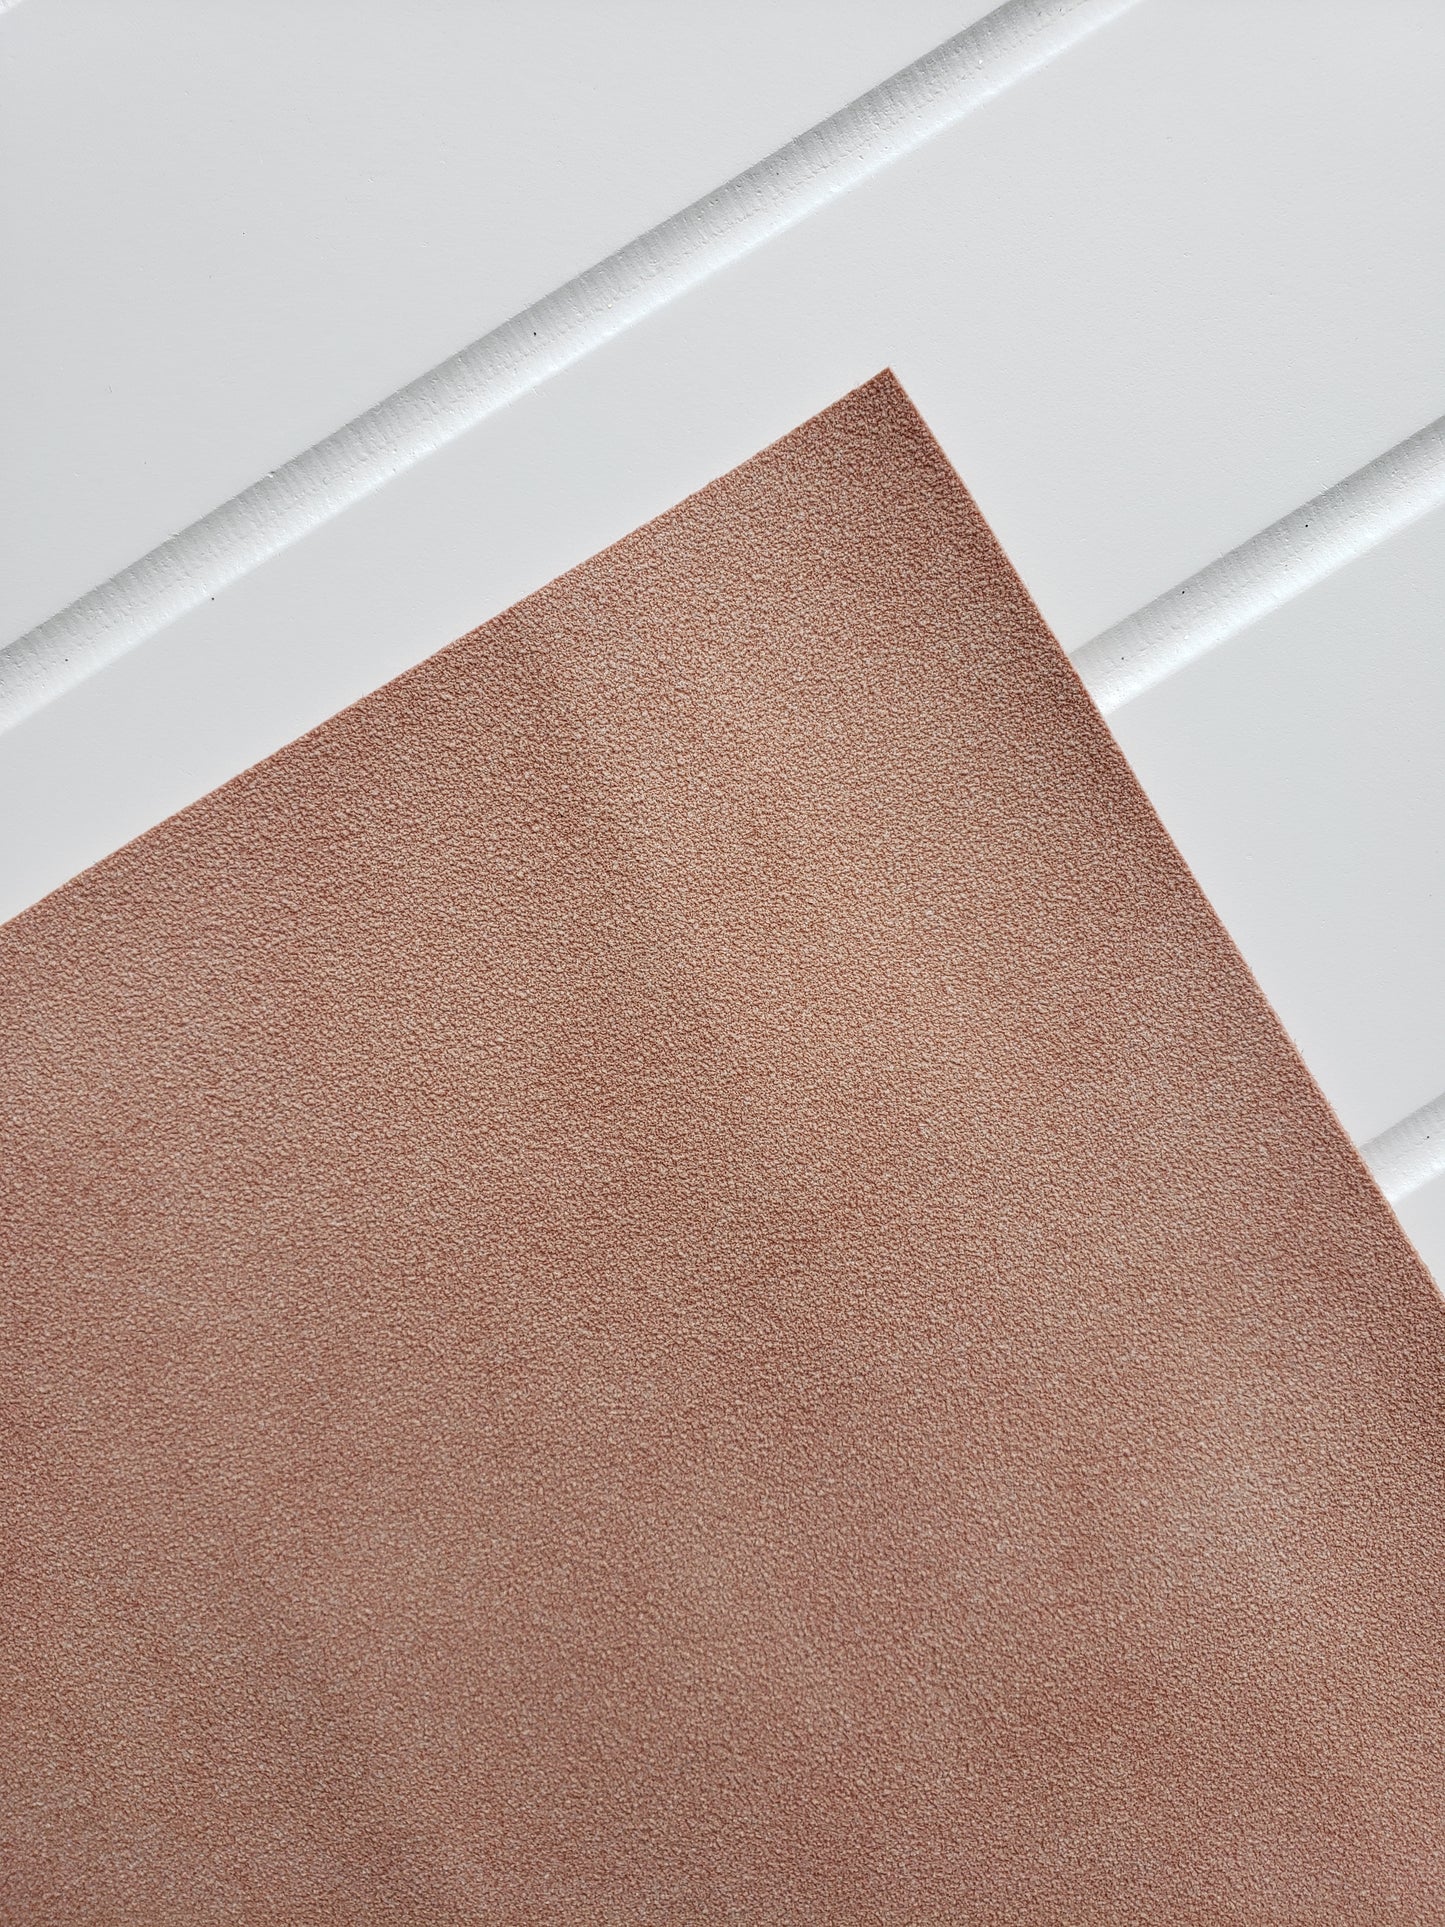 Soft Suede fabric sheet